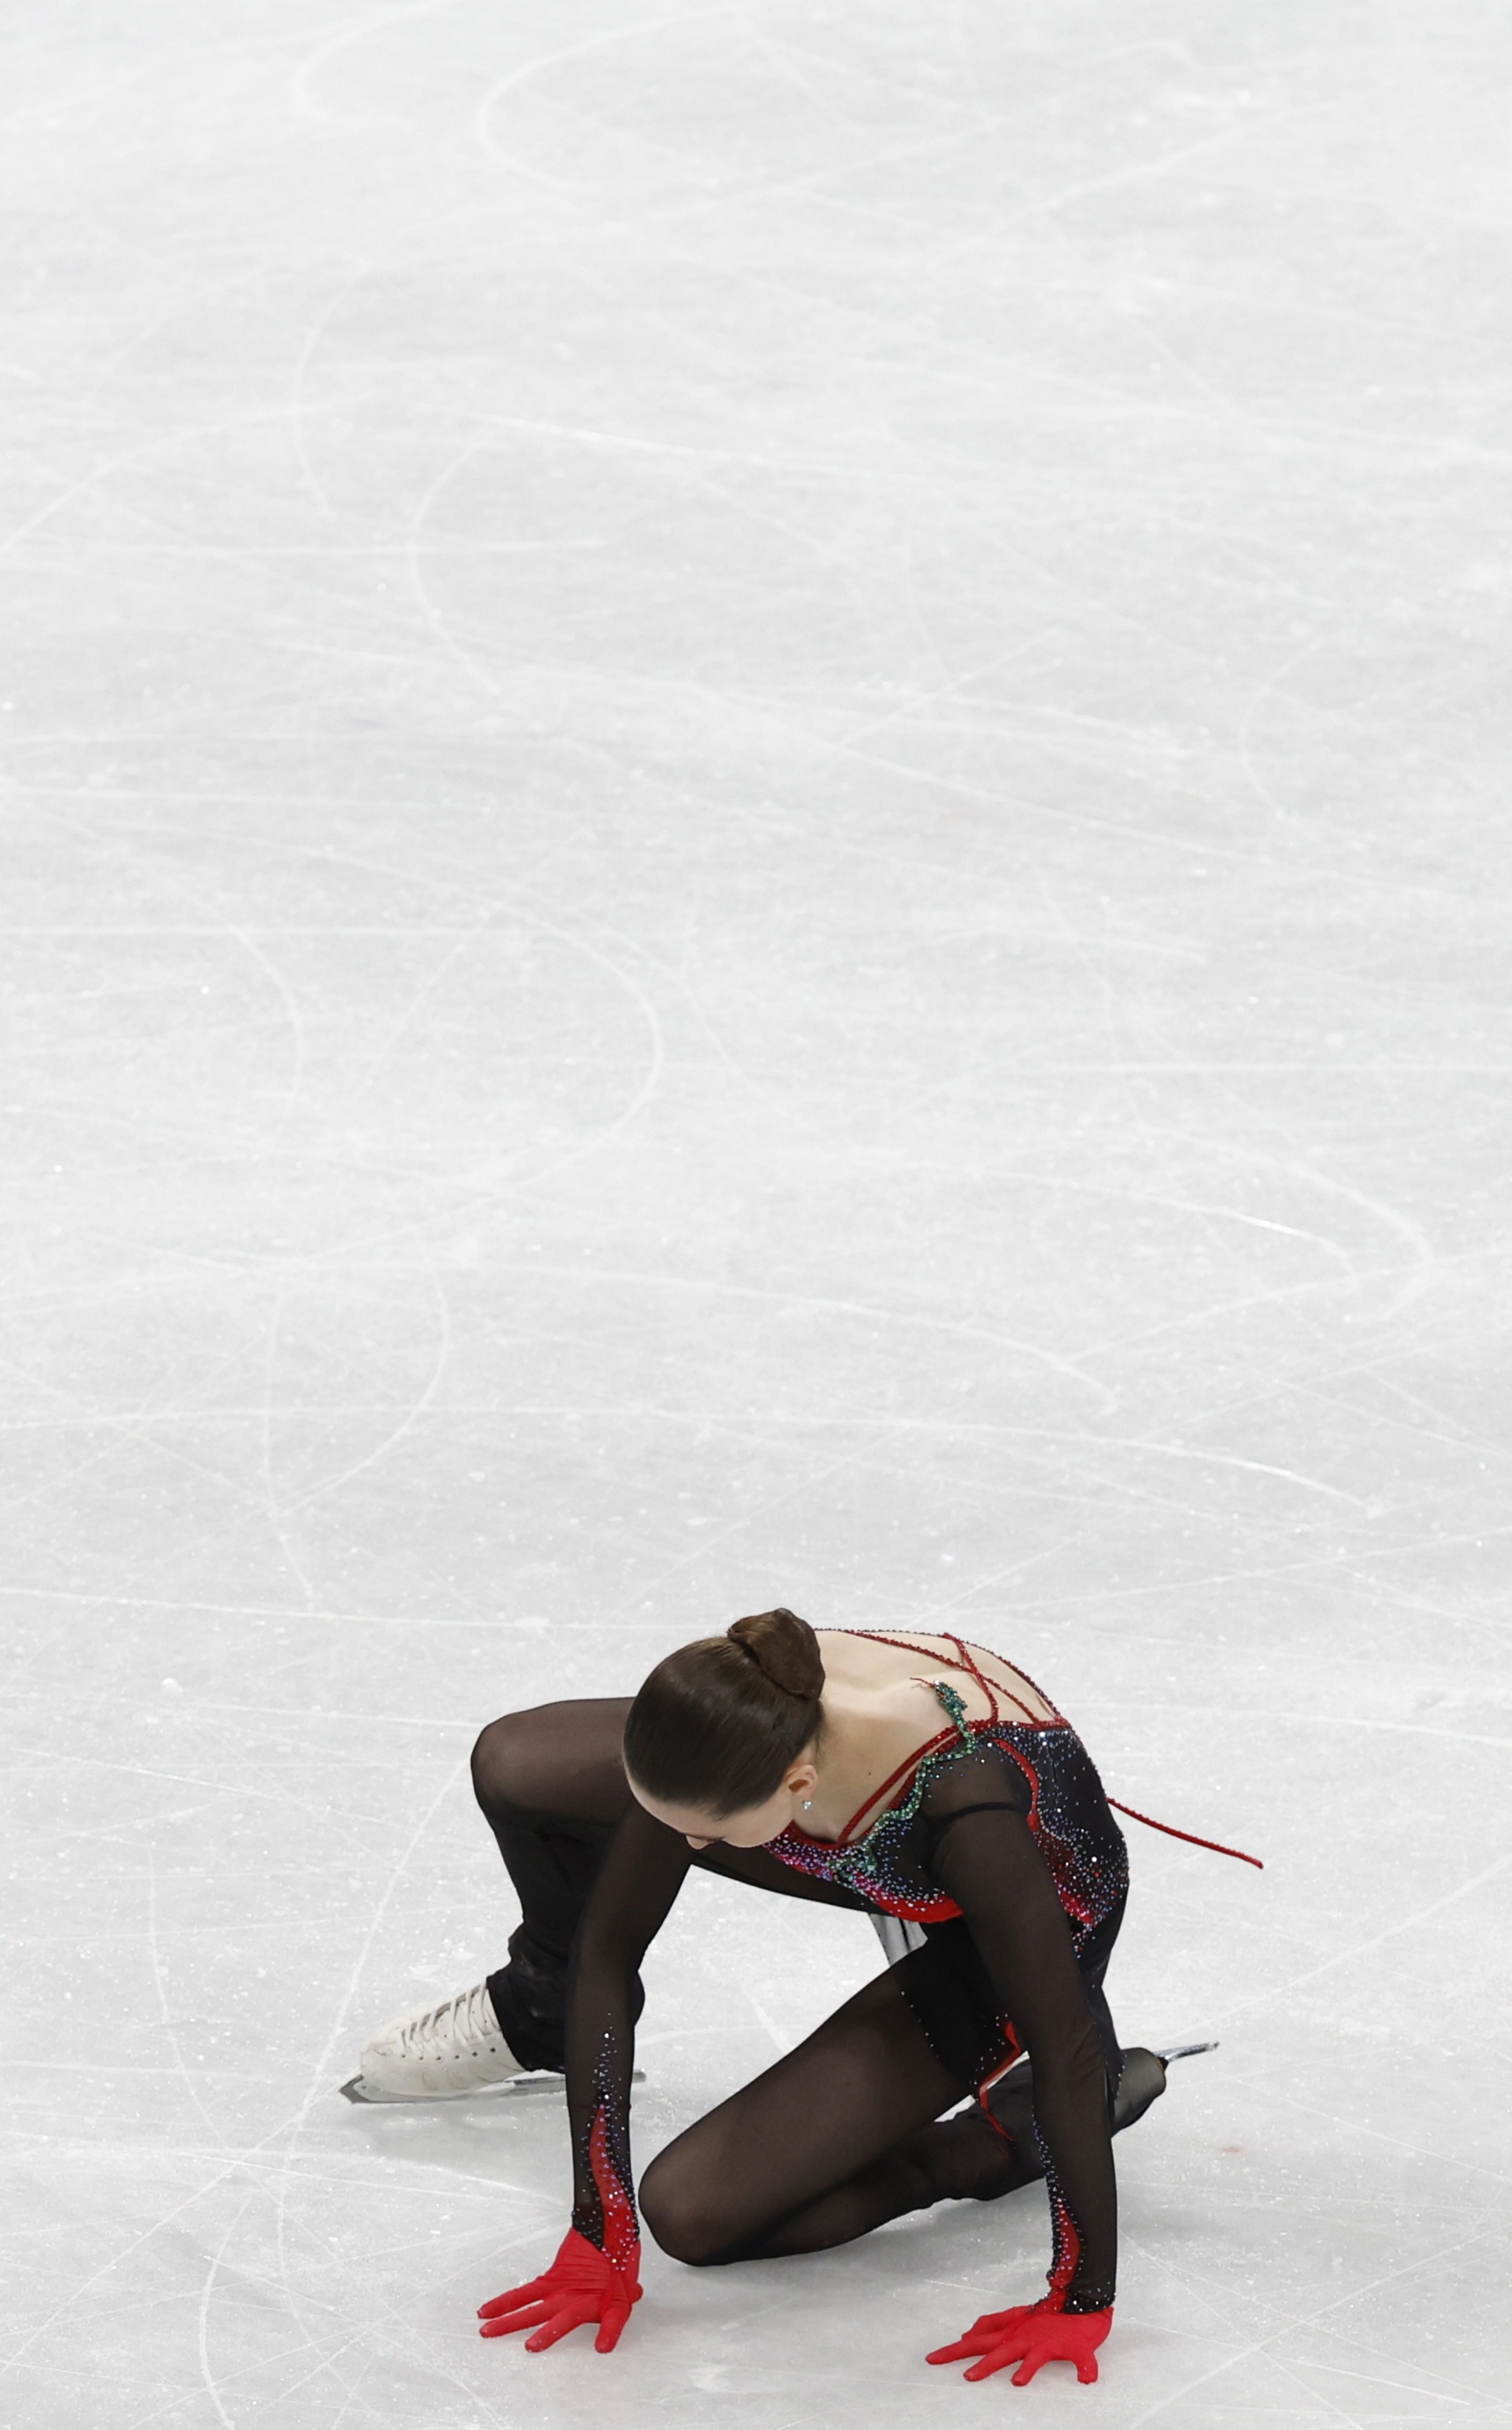 Russia's Kamila Valieva falls during her routine in the Beijing 2022 Winter Games figure skating final, Beijing, China, Feb. 17, 2022. (EPA Photo)